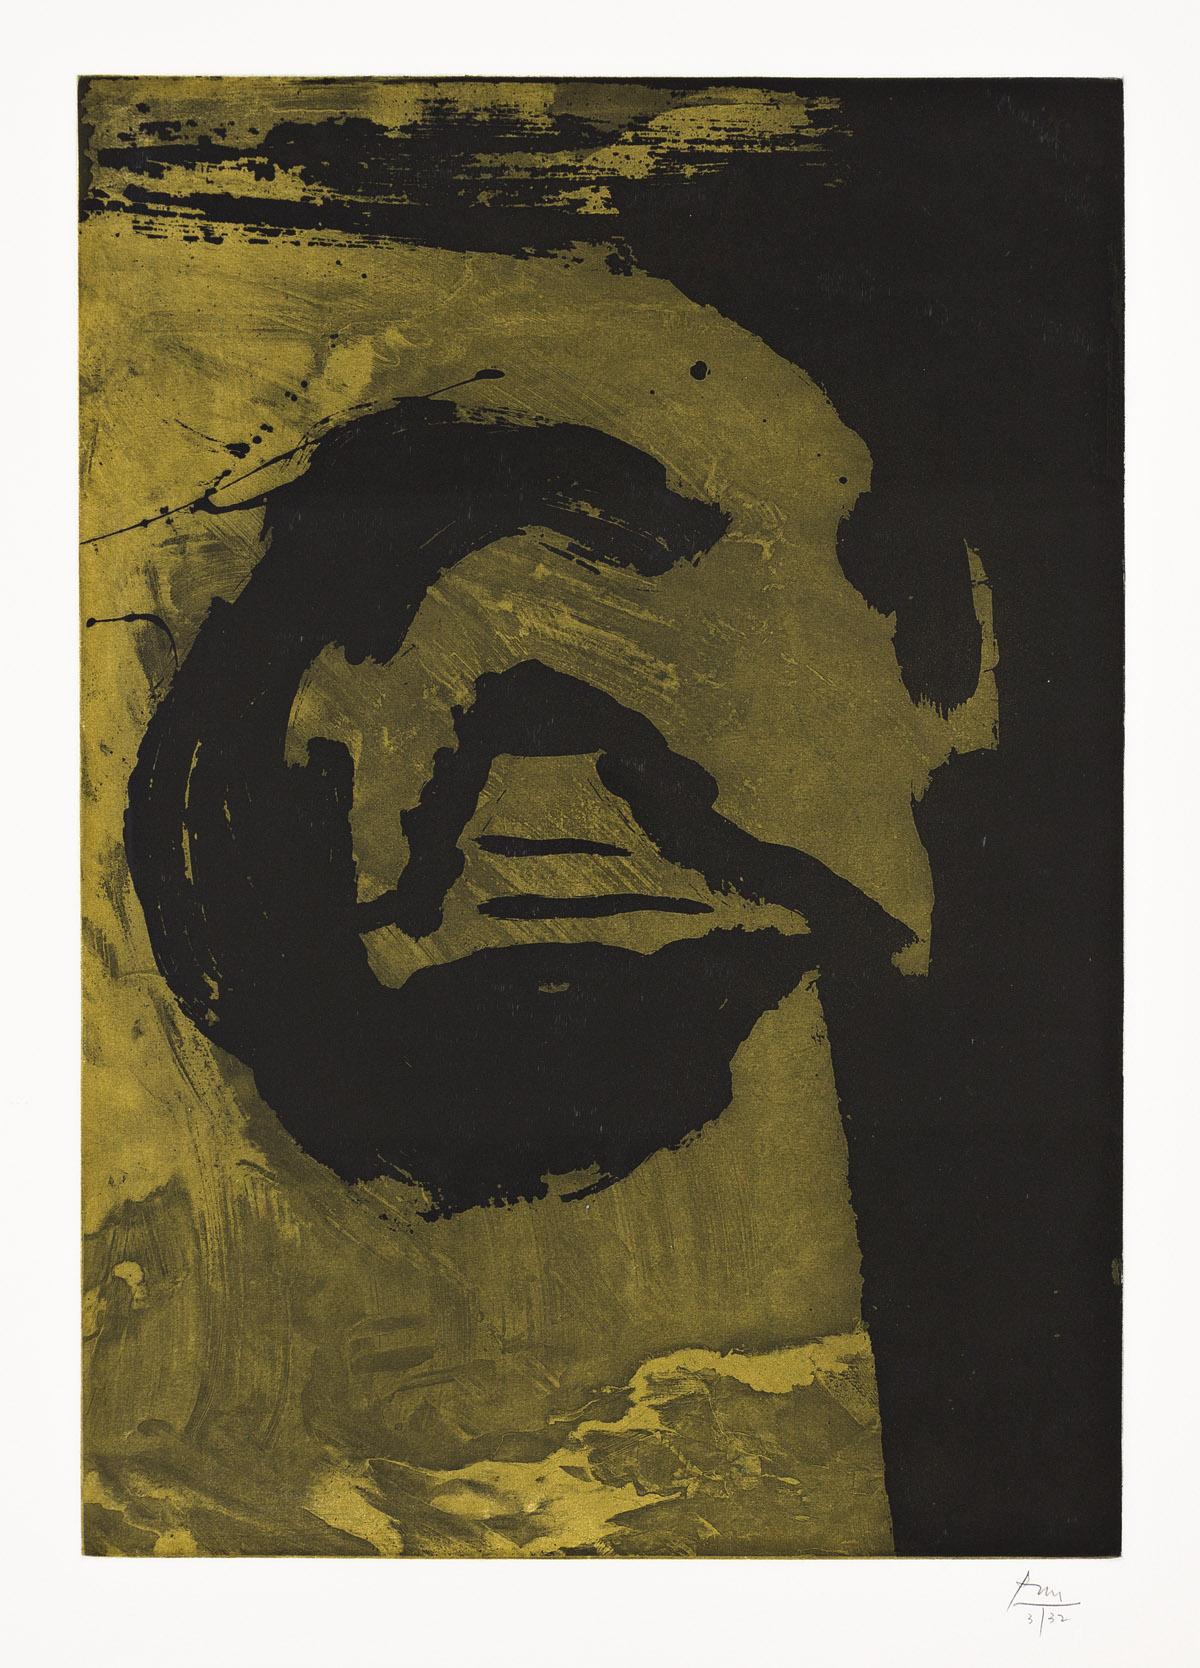 Robert Motherwell Abstract Print - Primal Sign VI (Moss)